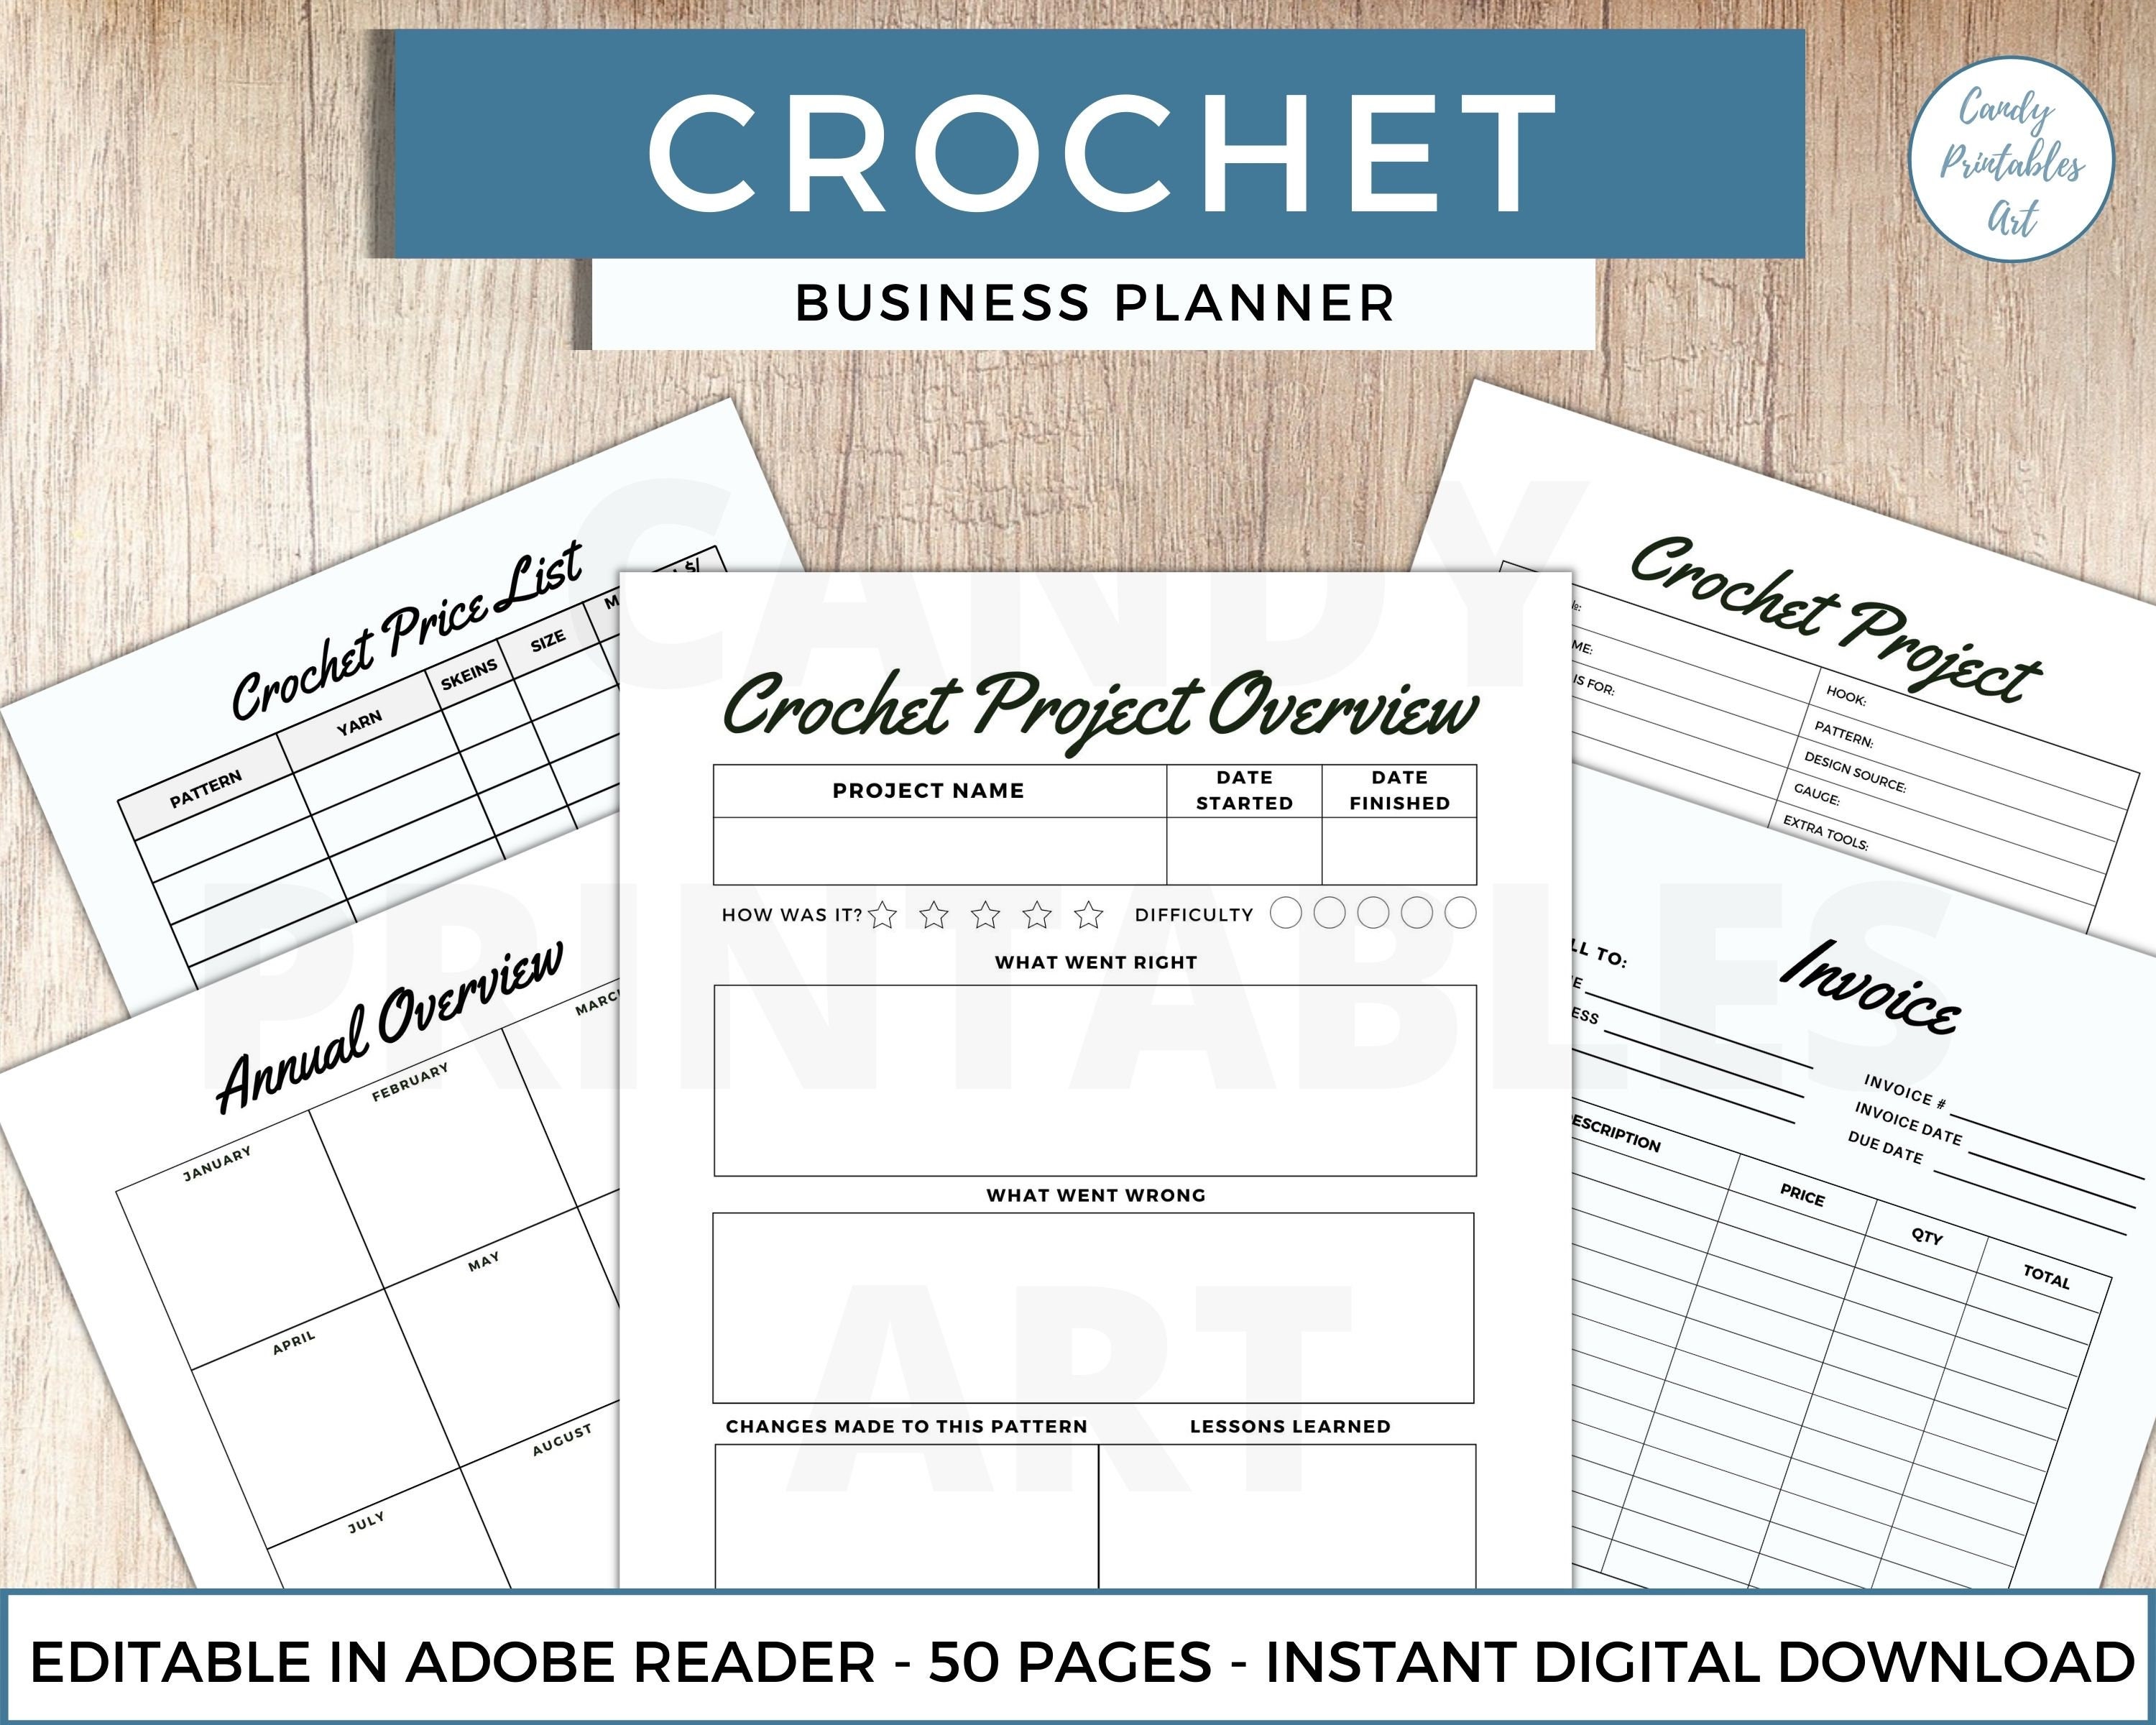 Crochet Journal  Crochet organizer, Crochet business, Easy crochet projects